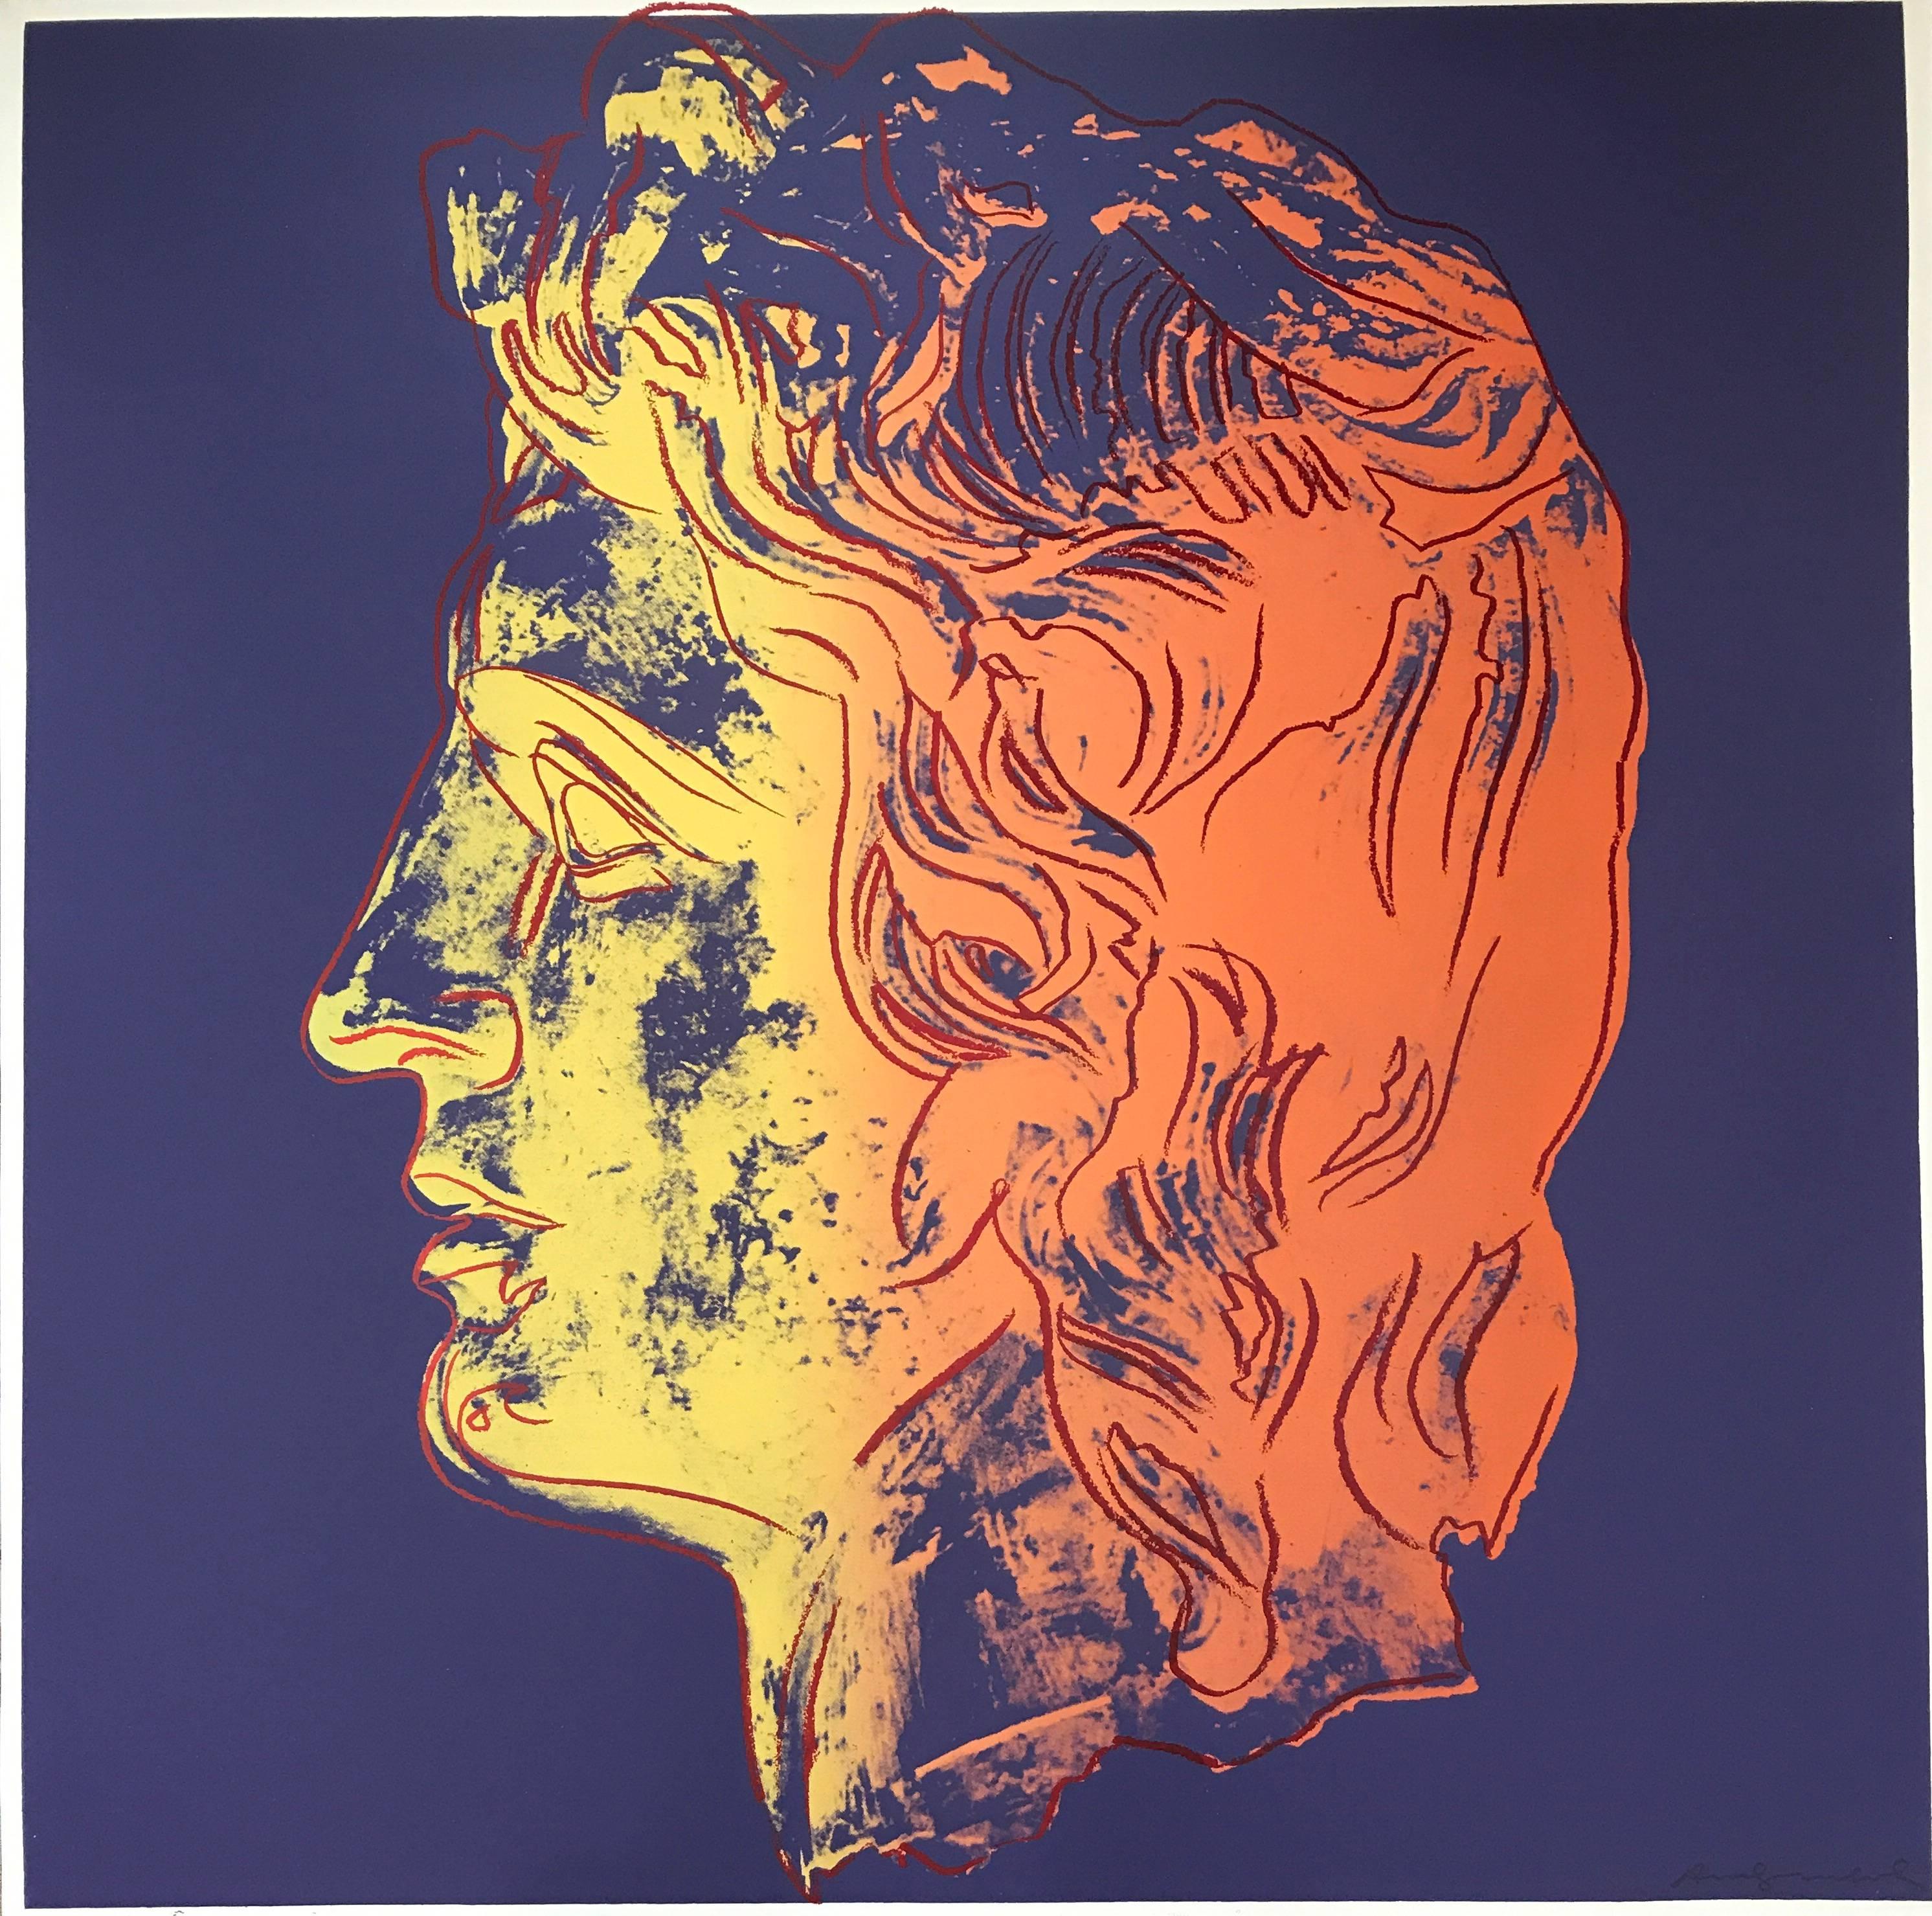 Andy Warhol Portrait Print - Alexander The Great F&S IIB.291-292